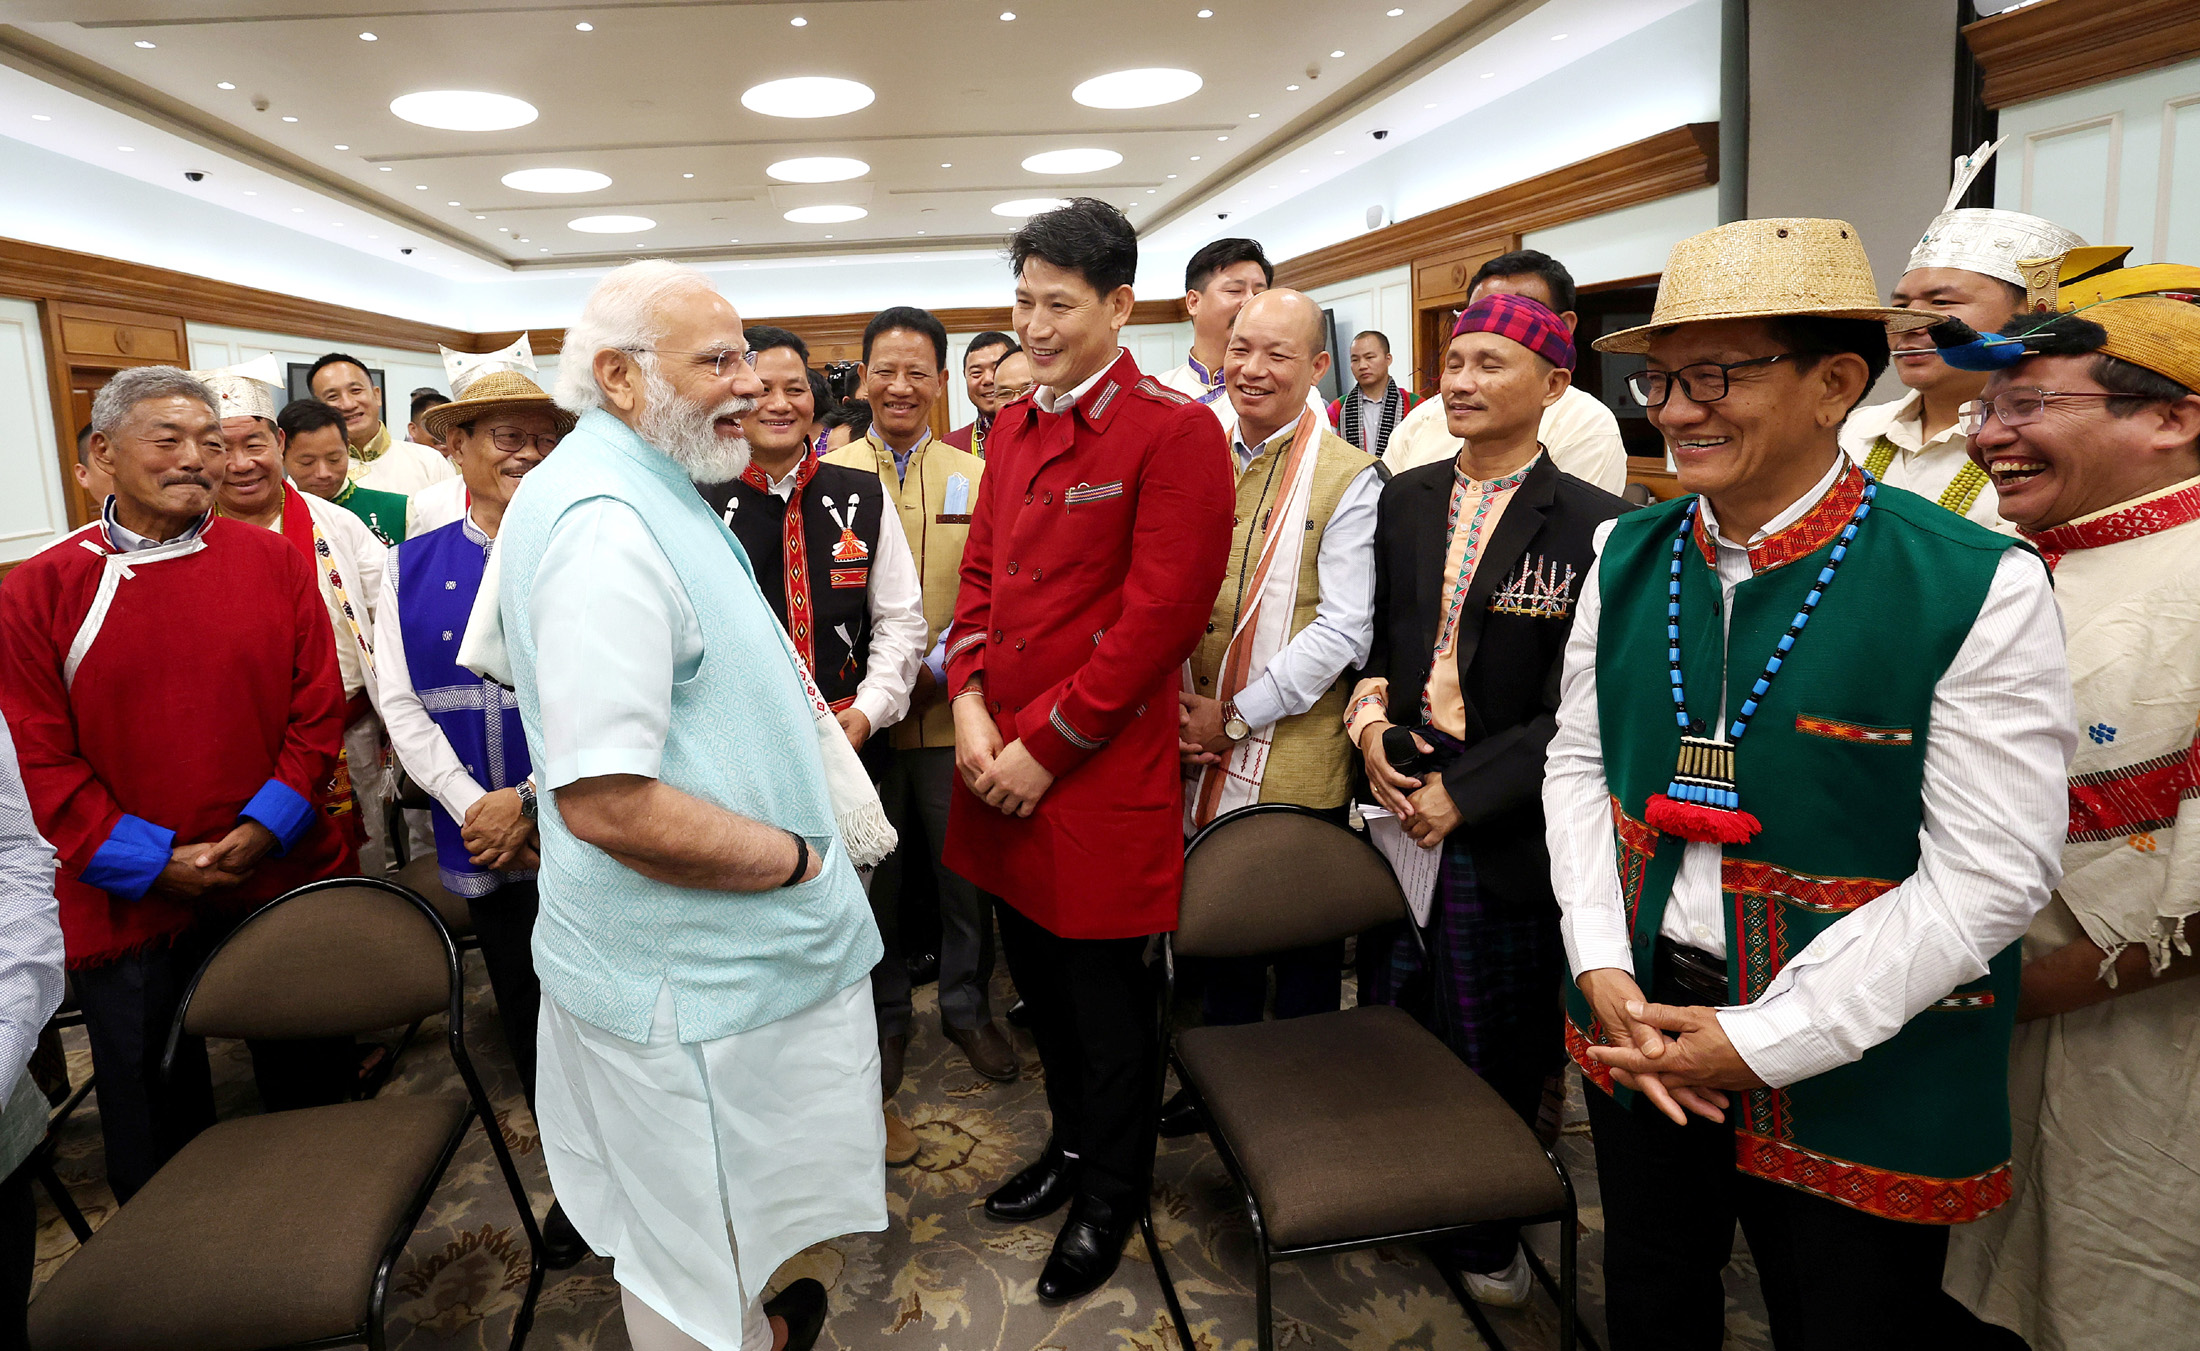 Tribal leaders from Arunachal Pradesh meet PM Modi after Gujarat visit